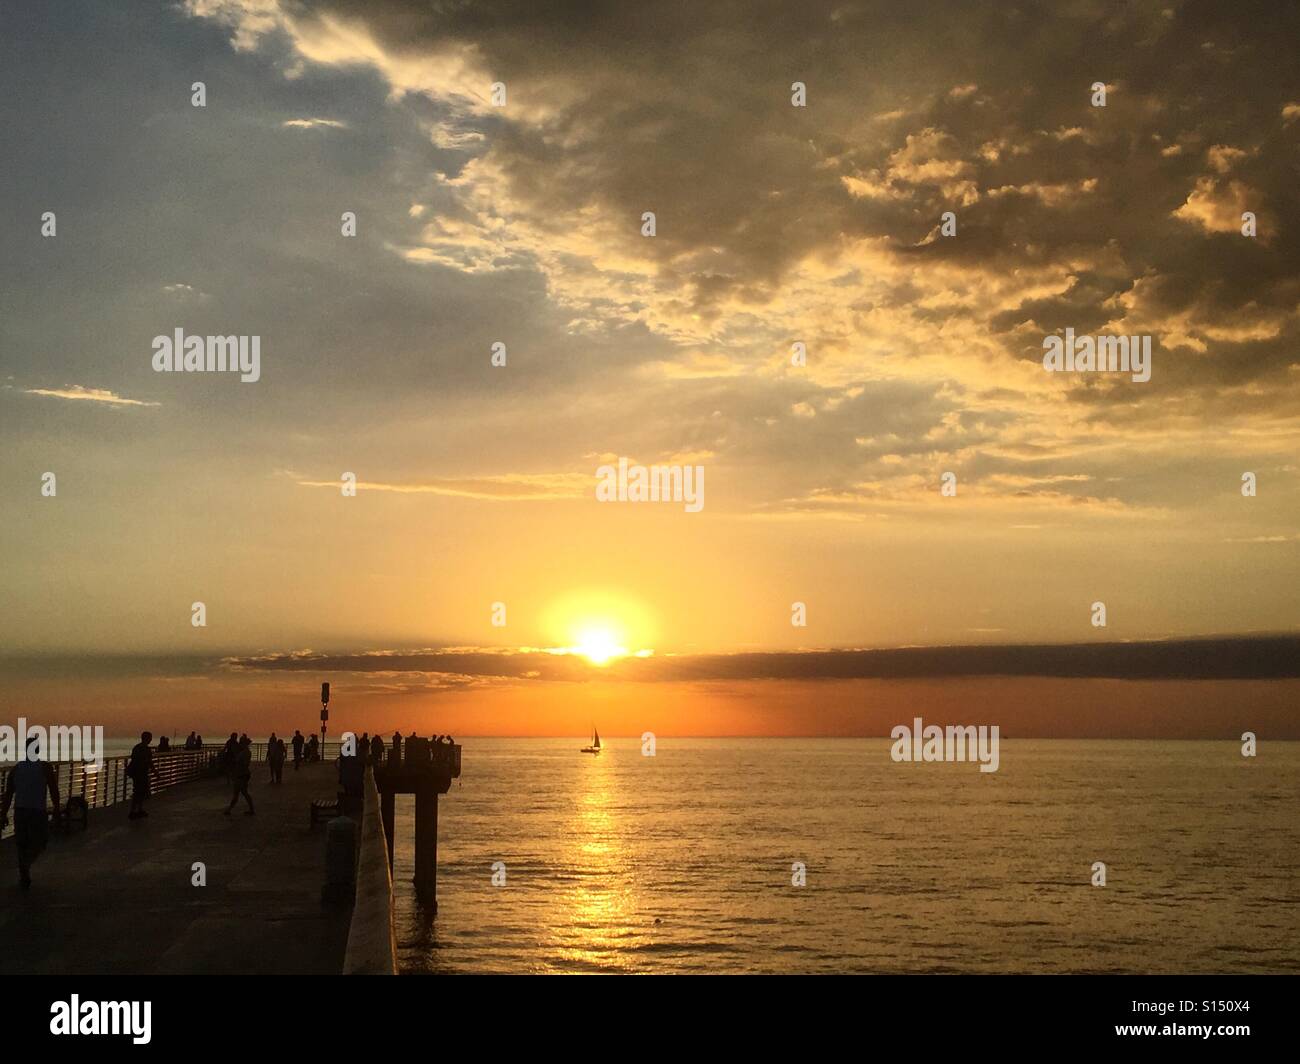 Sunset at Hermosa beach pier, California. Stock Photo